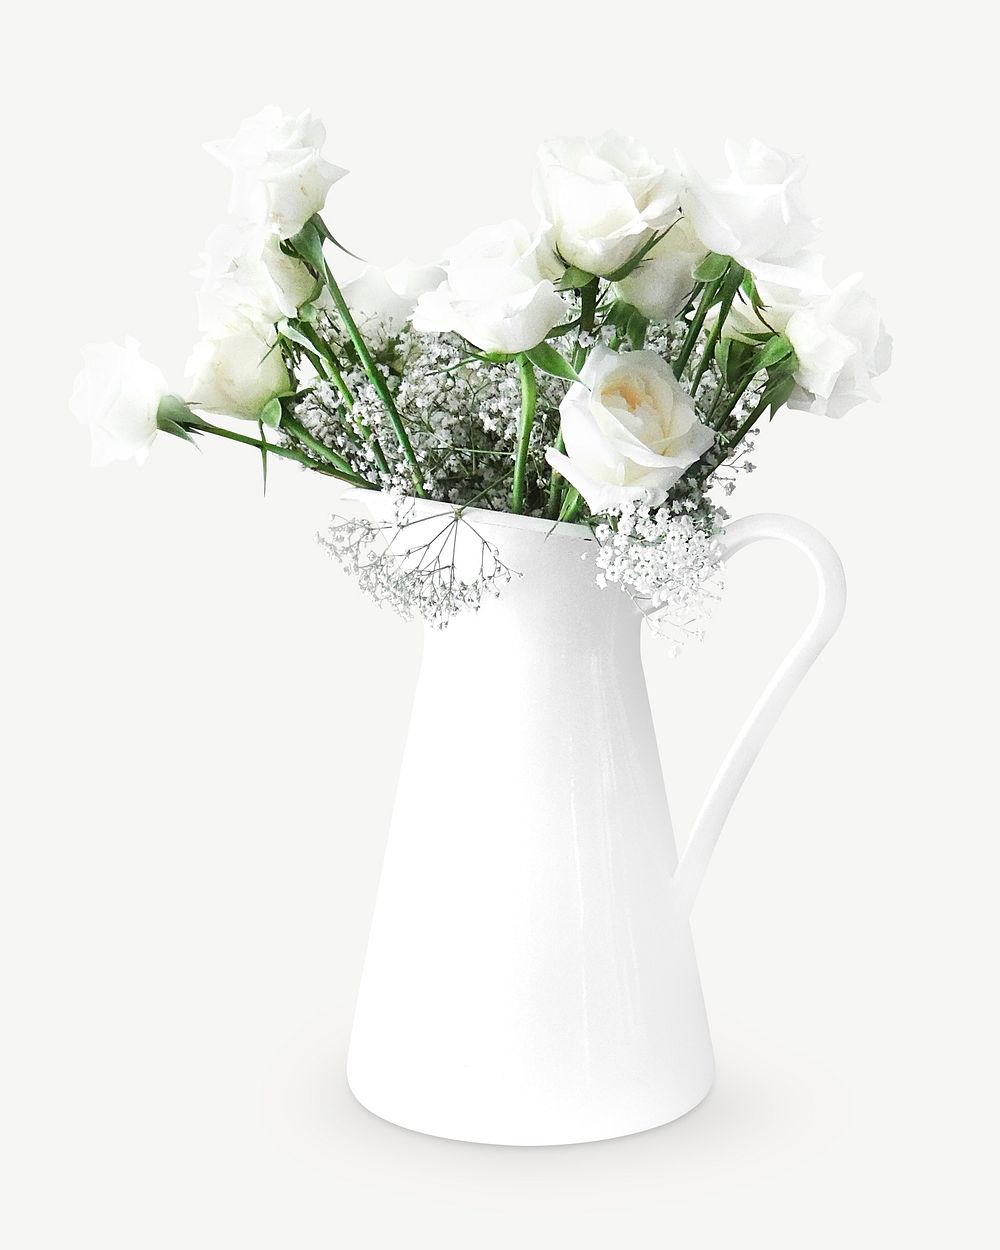 White rose vase psd collage element